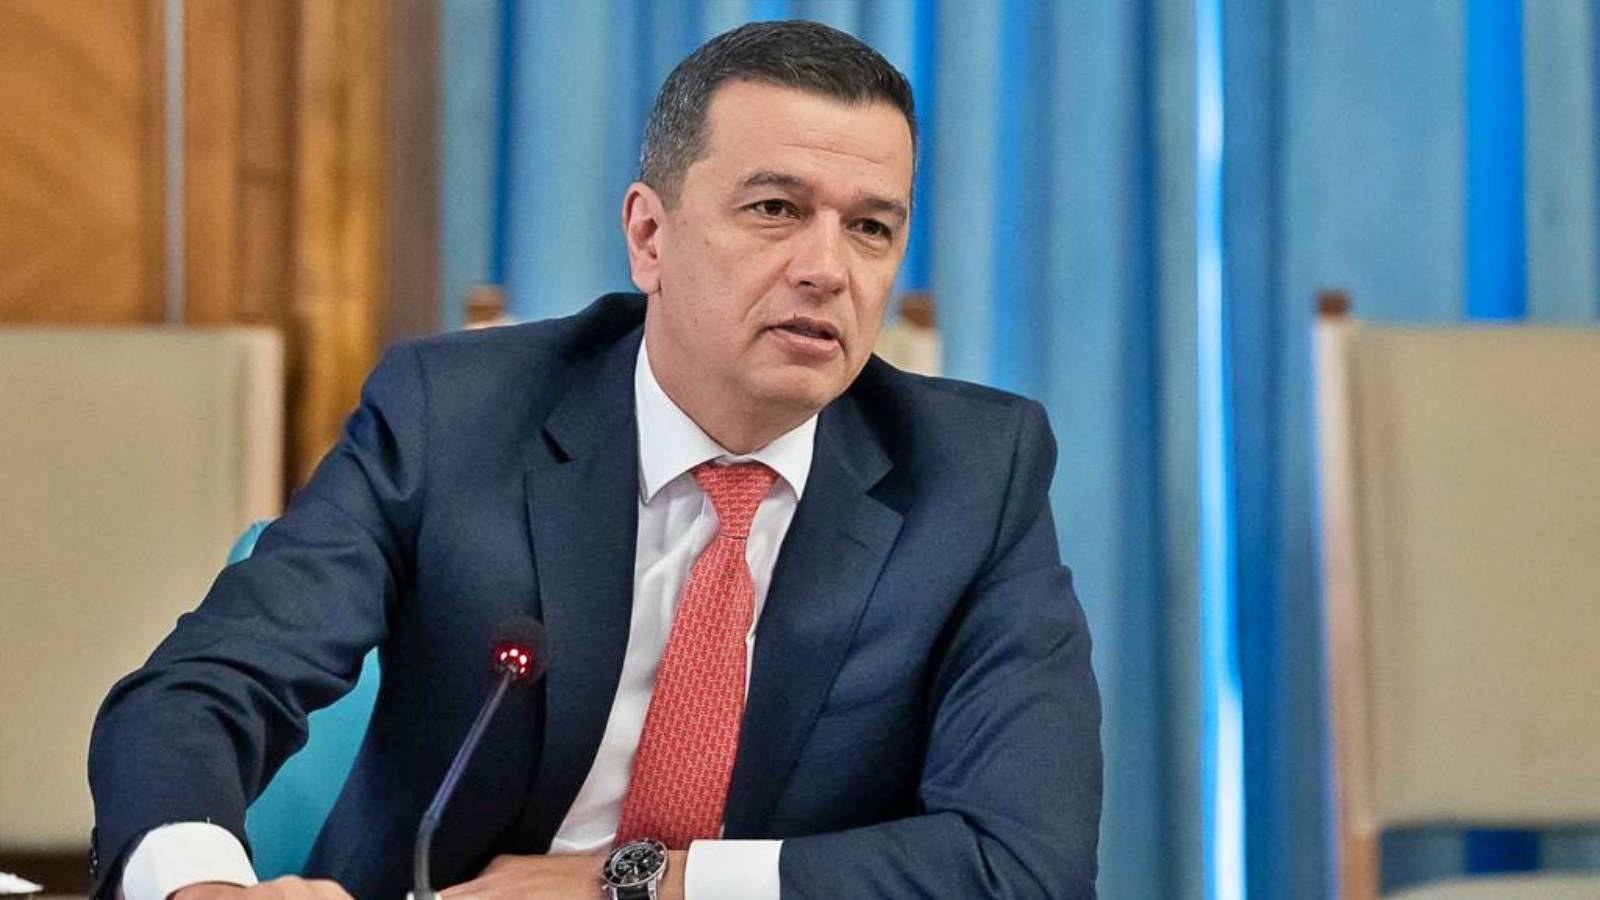 Sorin Grindeanu Offizielle Nachrichten LETZTER MOMENT Verkehrsminister Bau neuer Straßen